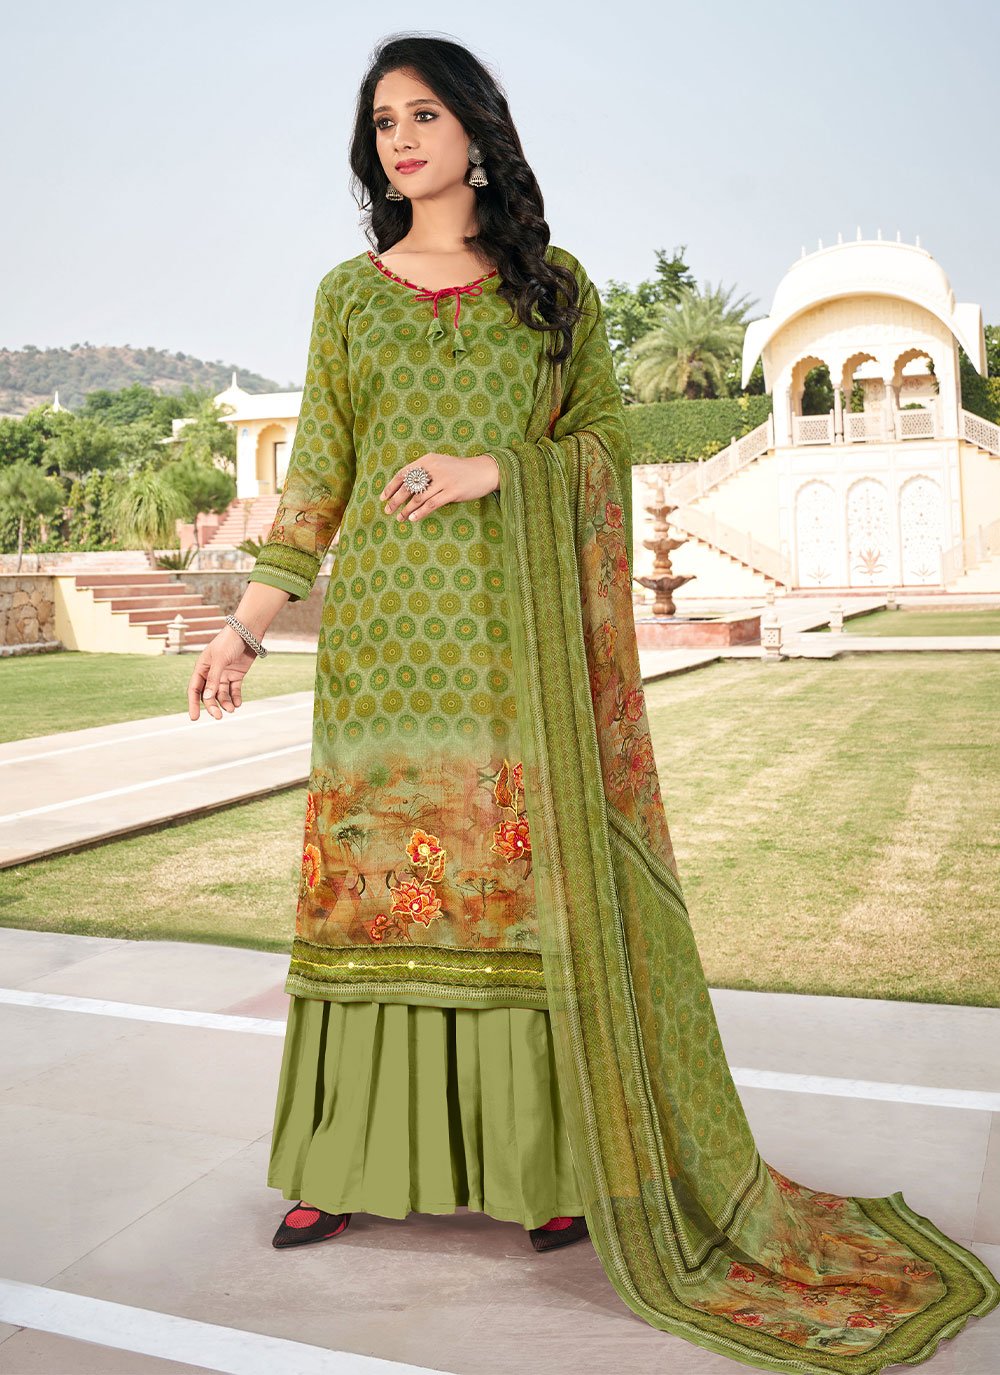 Latest Design Of Plazo Suit | Maharani Designer Boutique